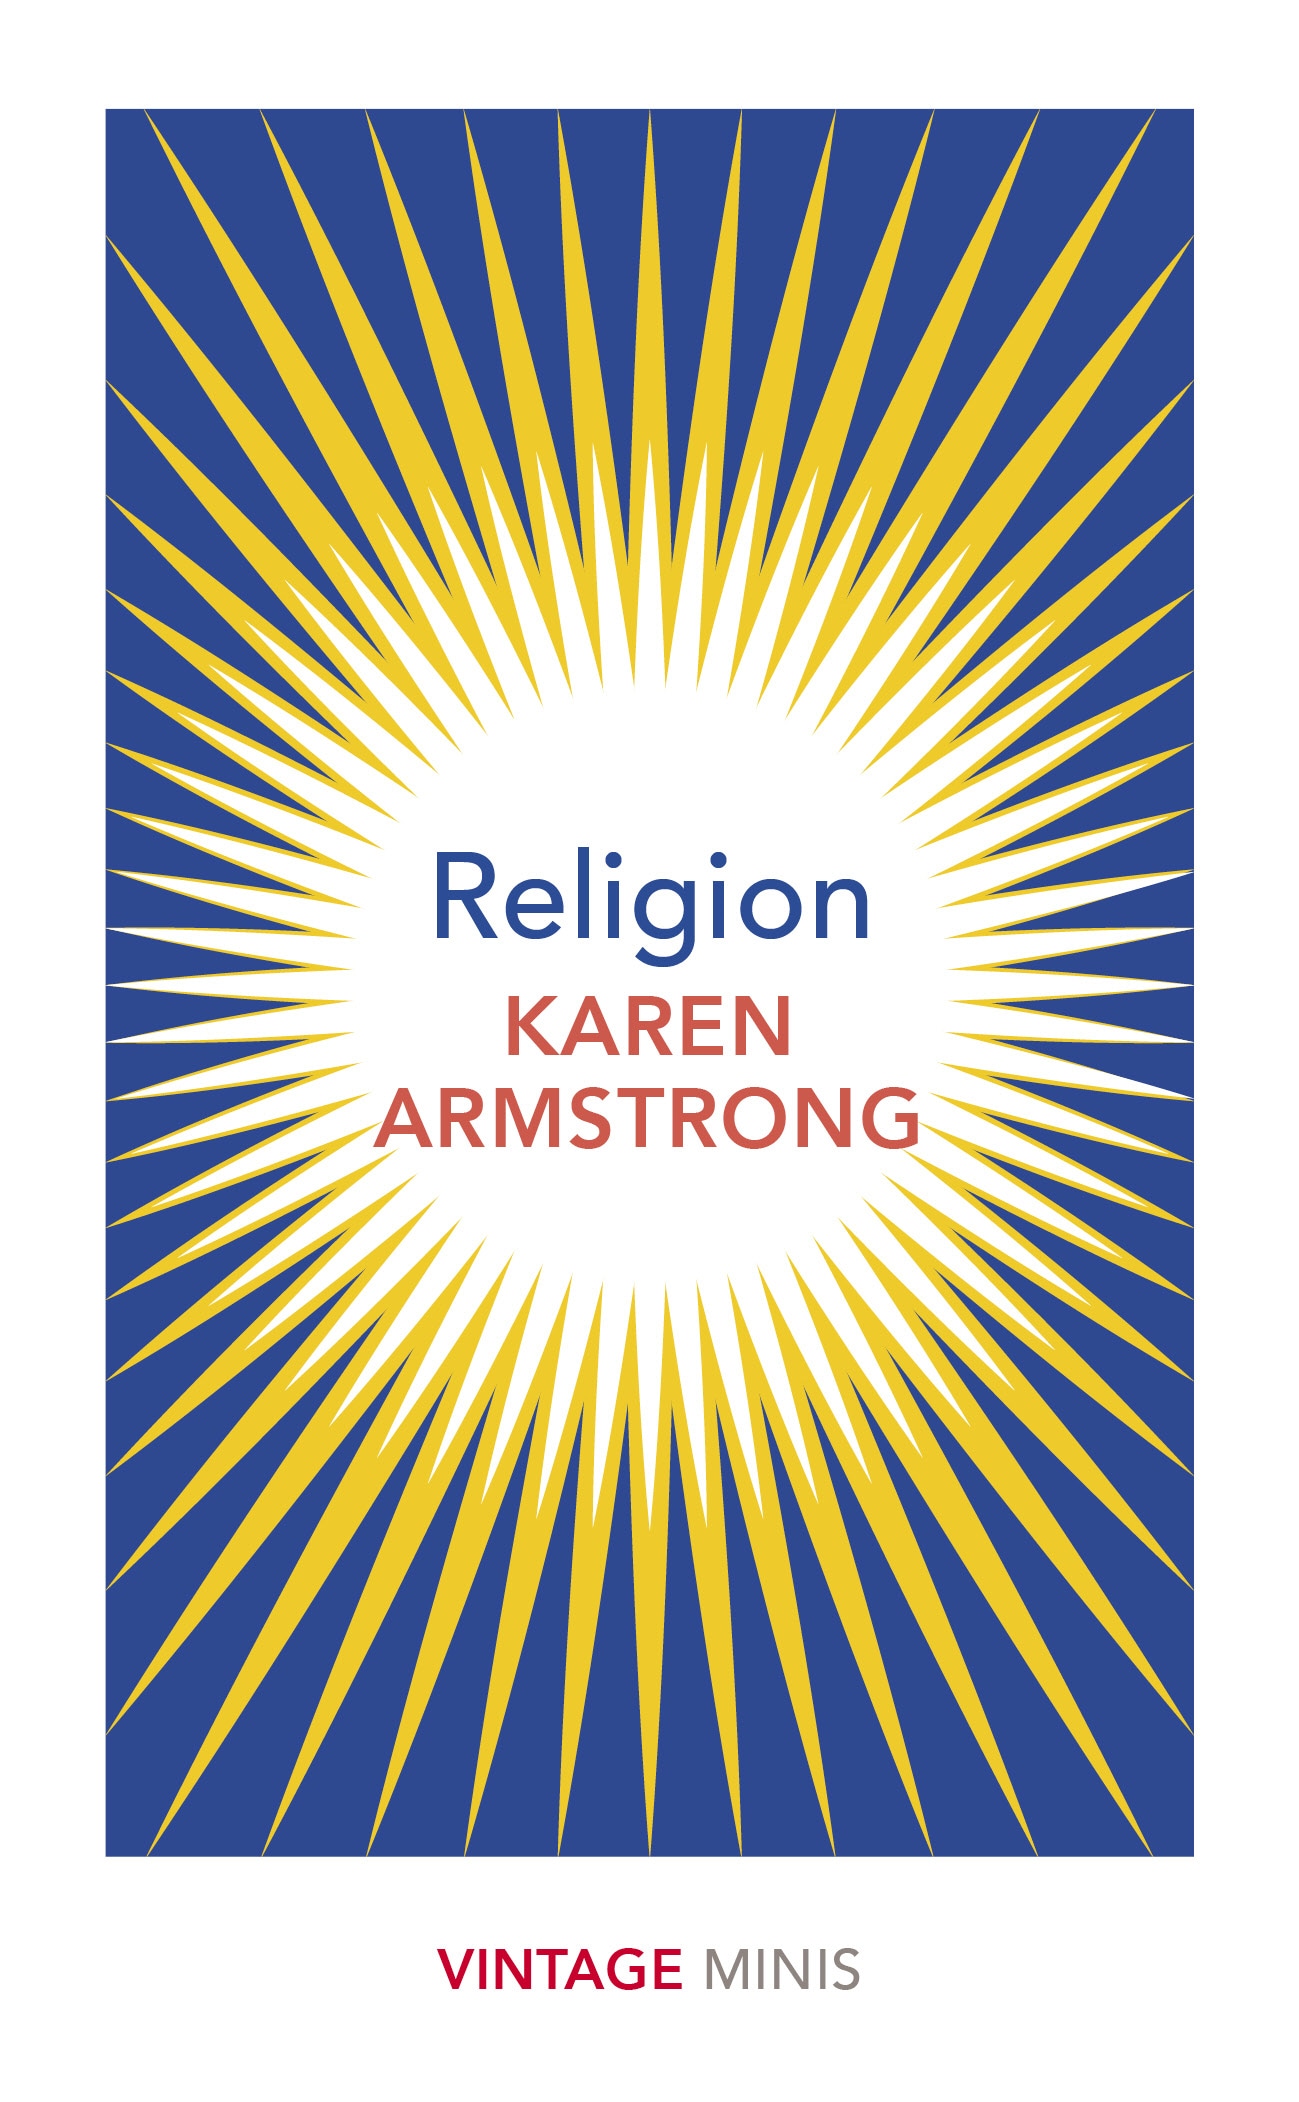 Book “Religion” by Karen Armstrong — October 3, 2019